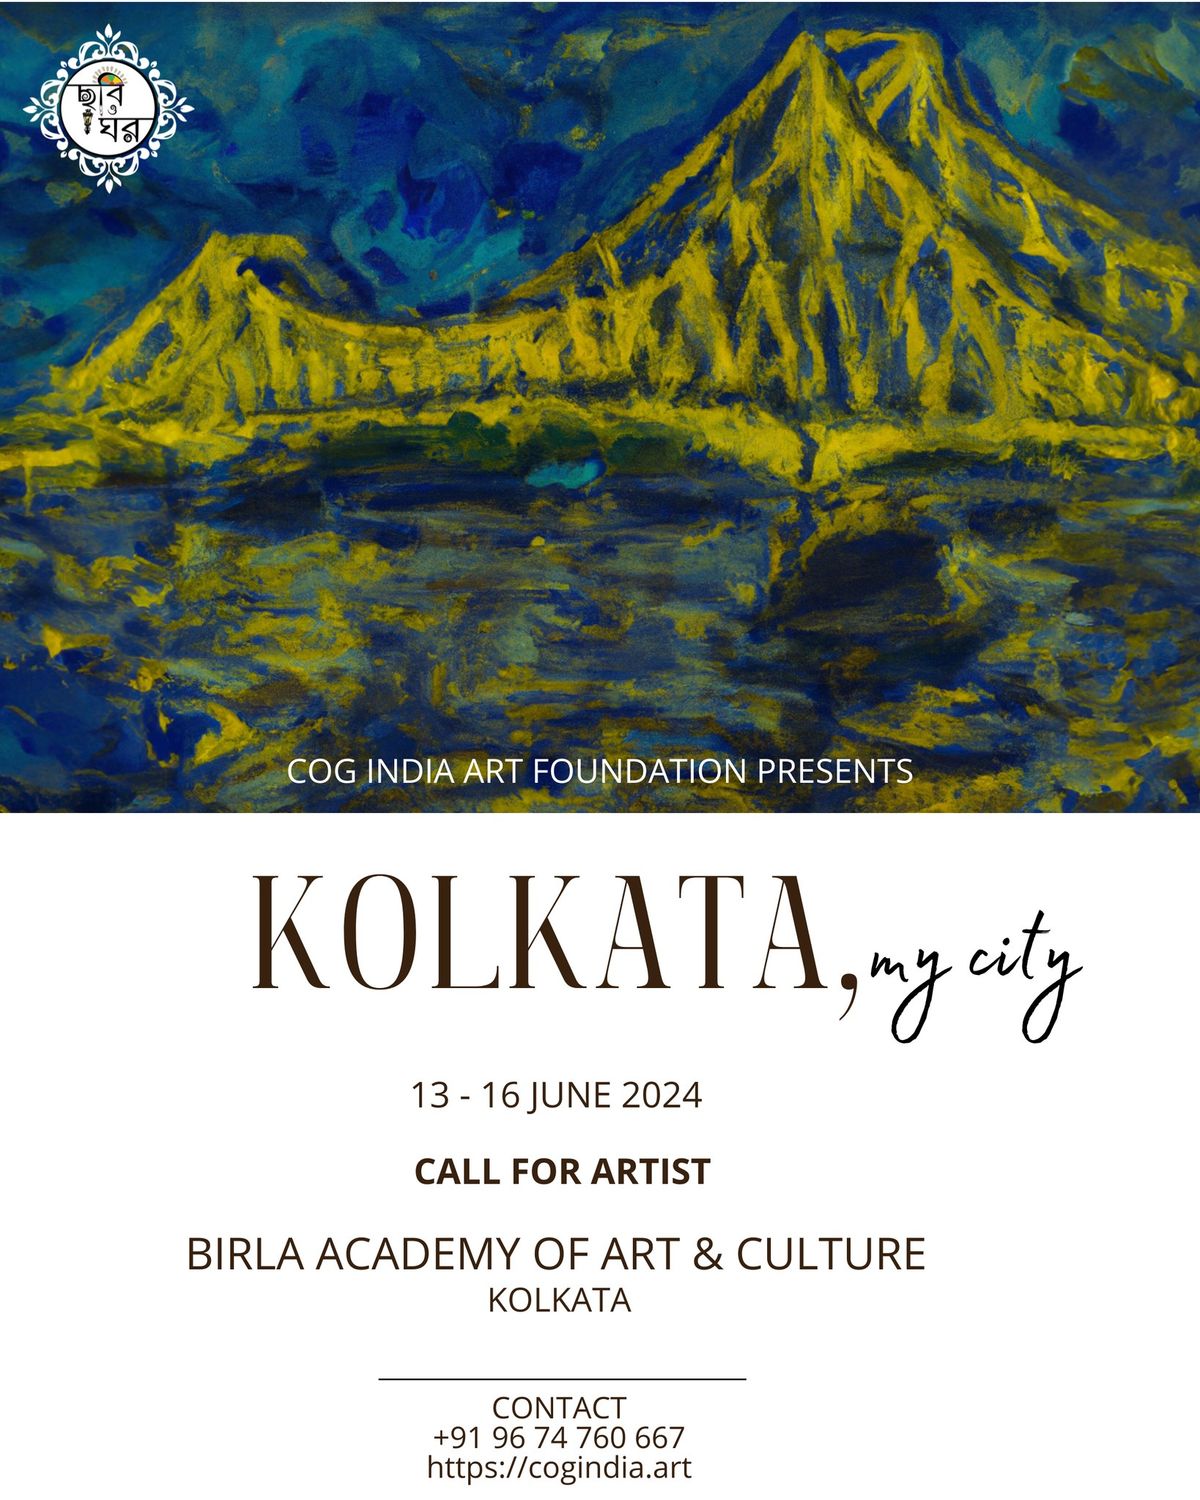 Kolkata, my city - Annual visual art exhibition of COG INDIA ART